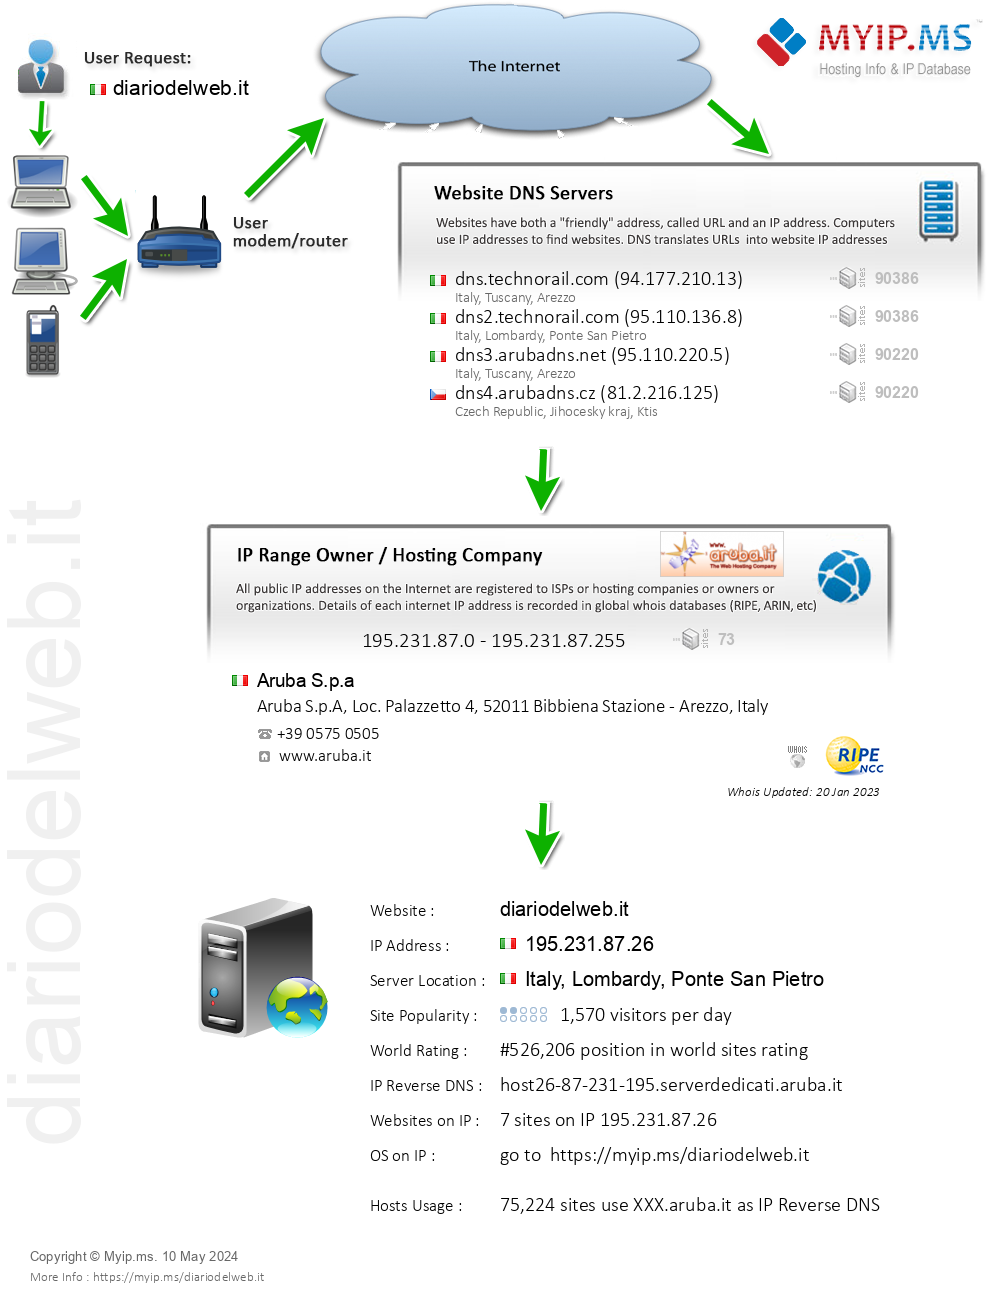 Diariodelweb.it - Website Hosting Visual IP Diagram